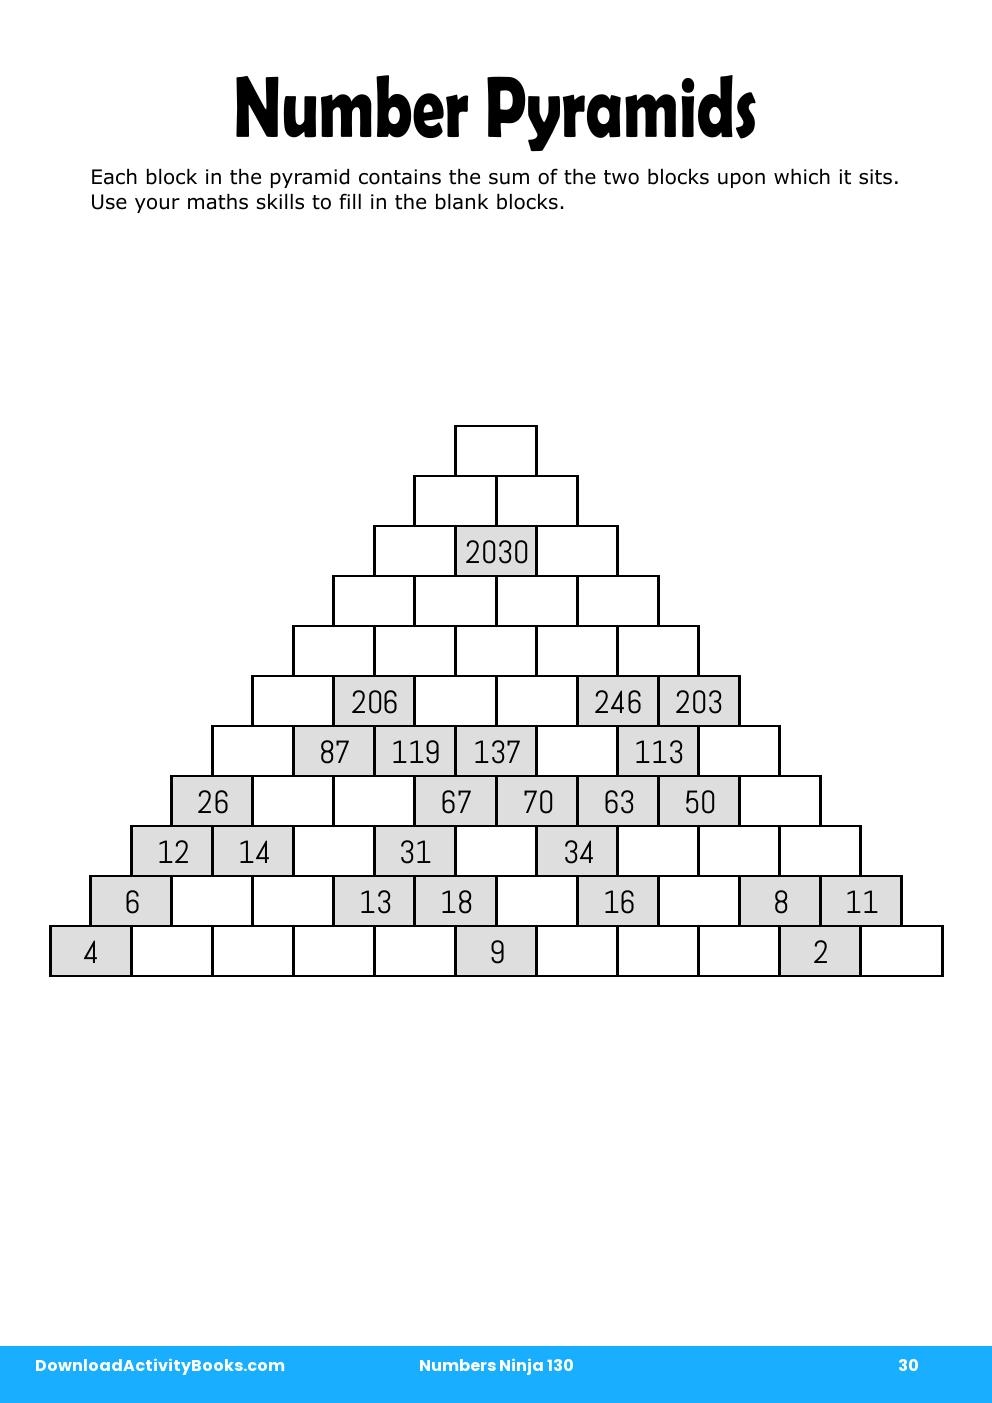 Number Pyramids in Numbers Ninja 130